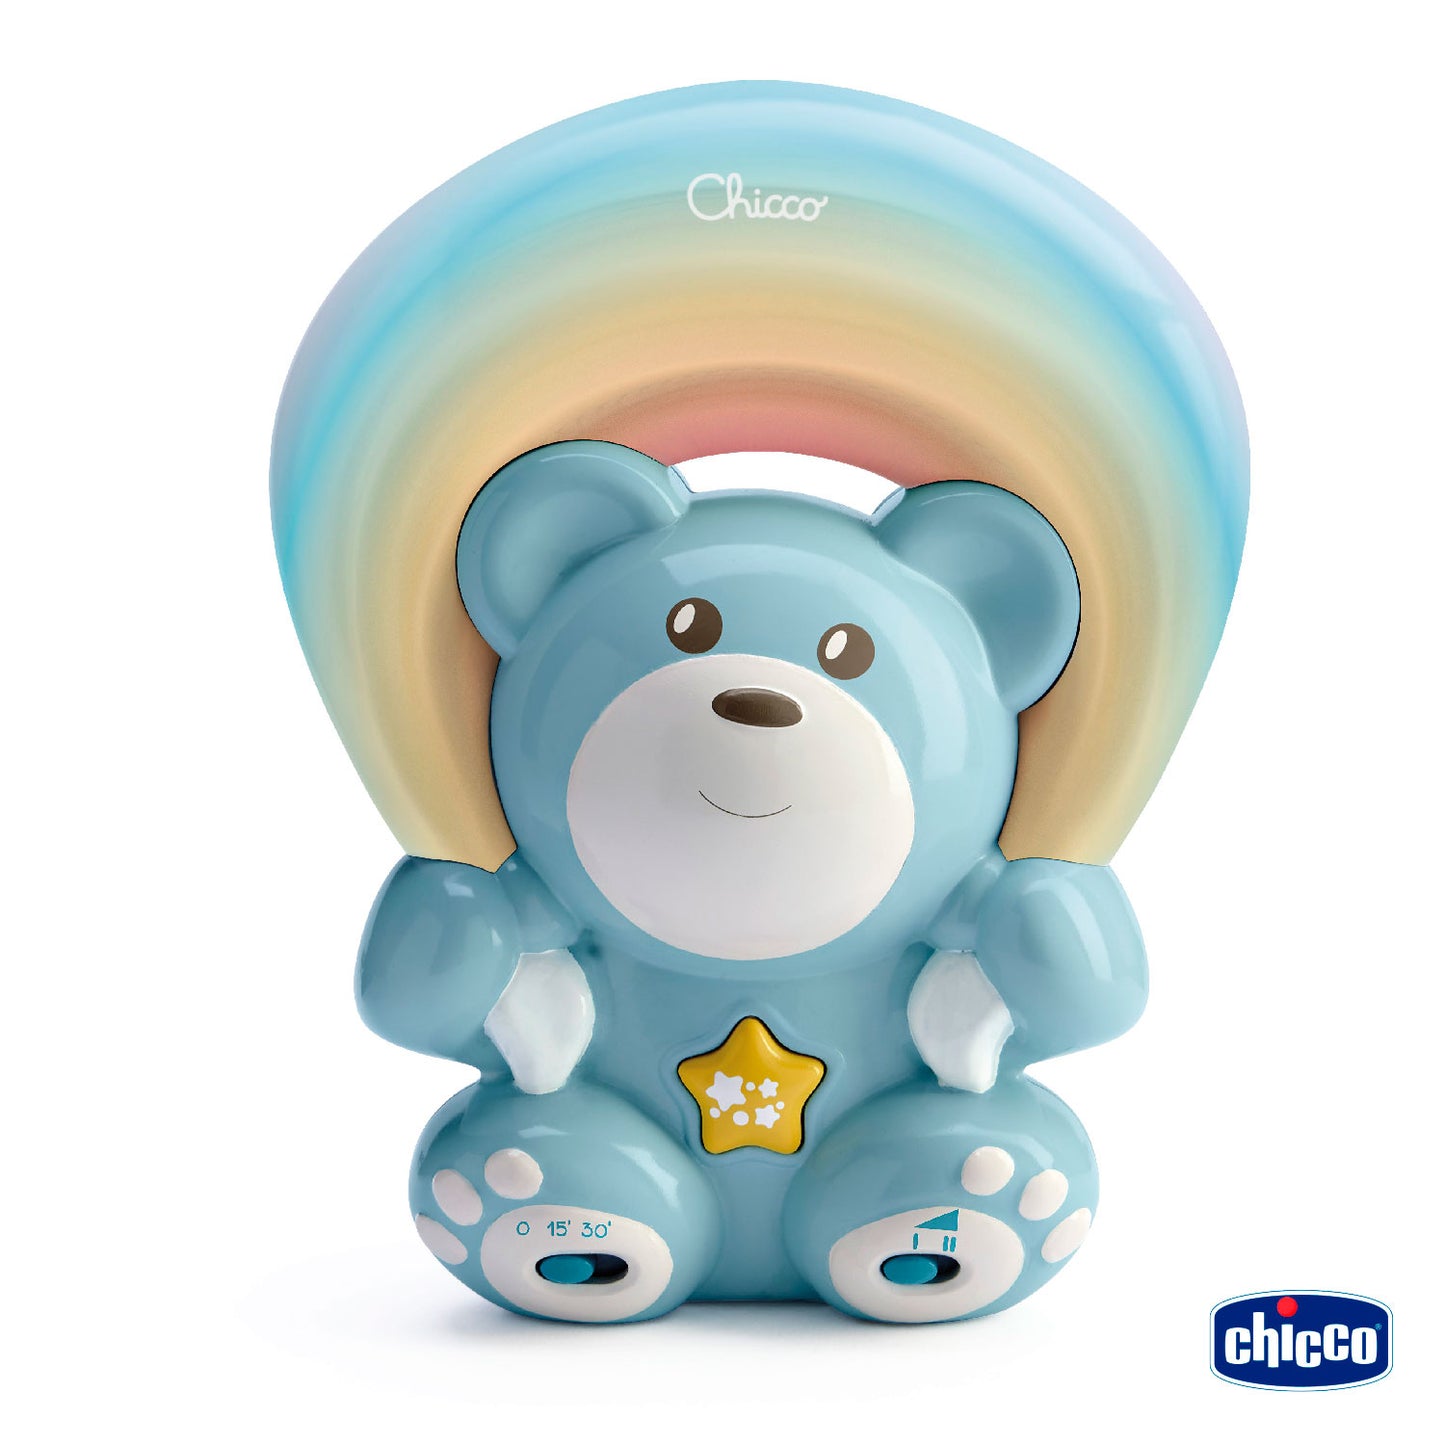 Chicco - First Dreams Rainbow Bear Projector